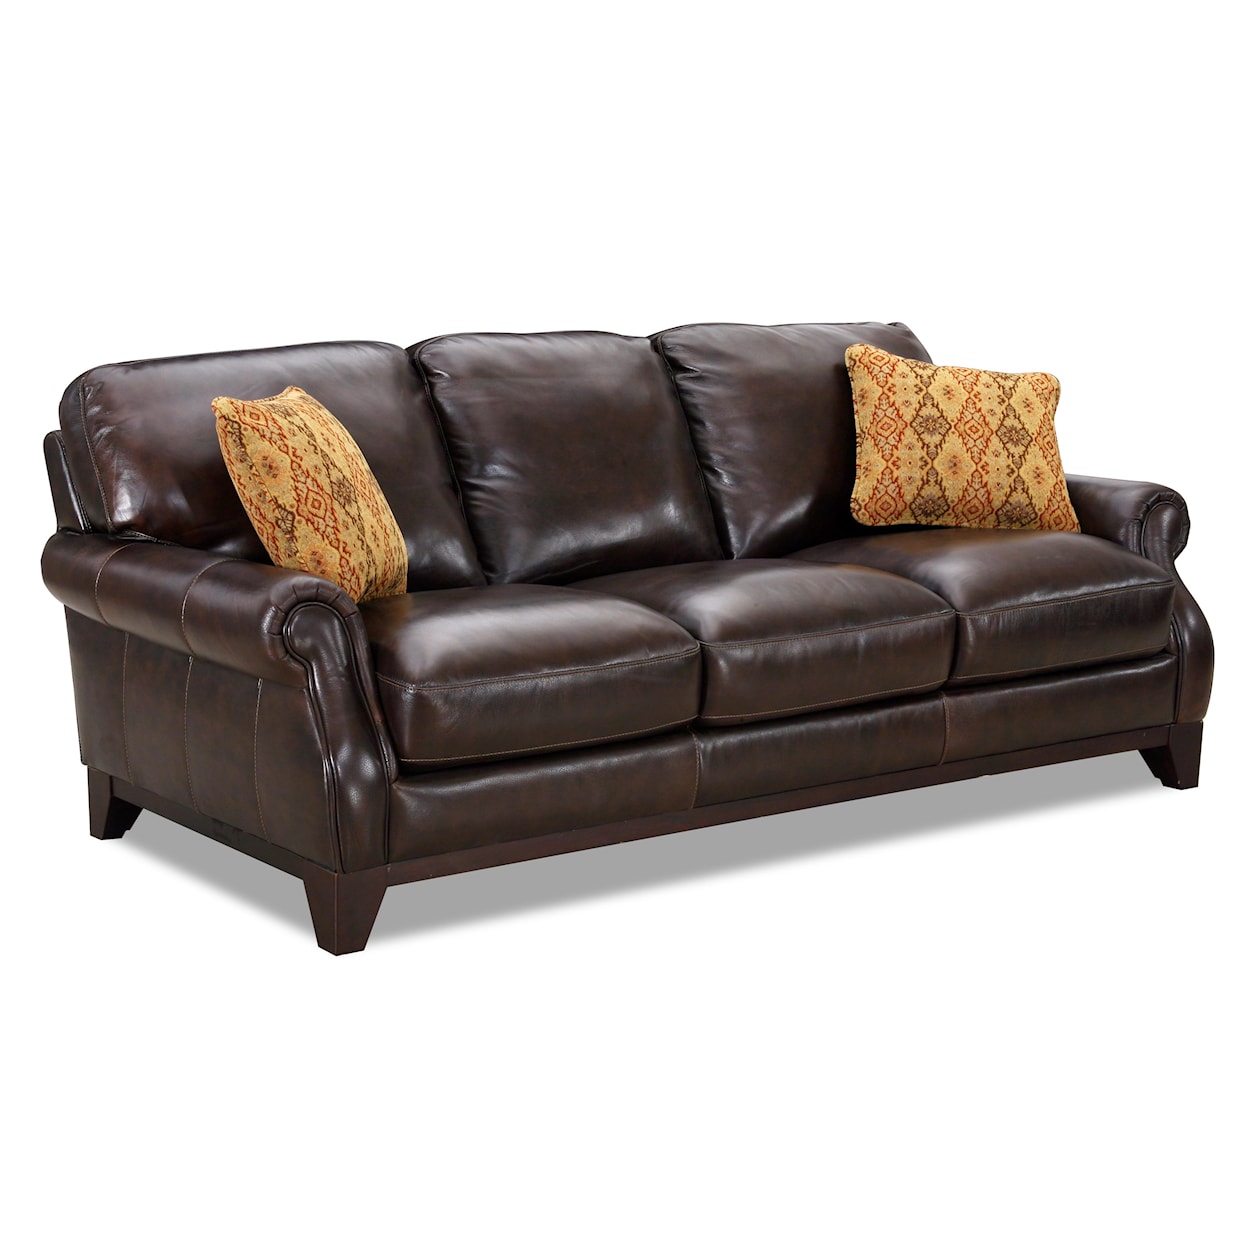 Simon Li 6973 Leather Rolled Arm Sofa